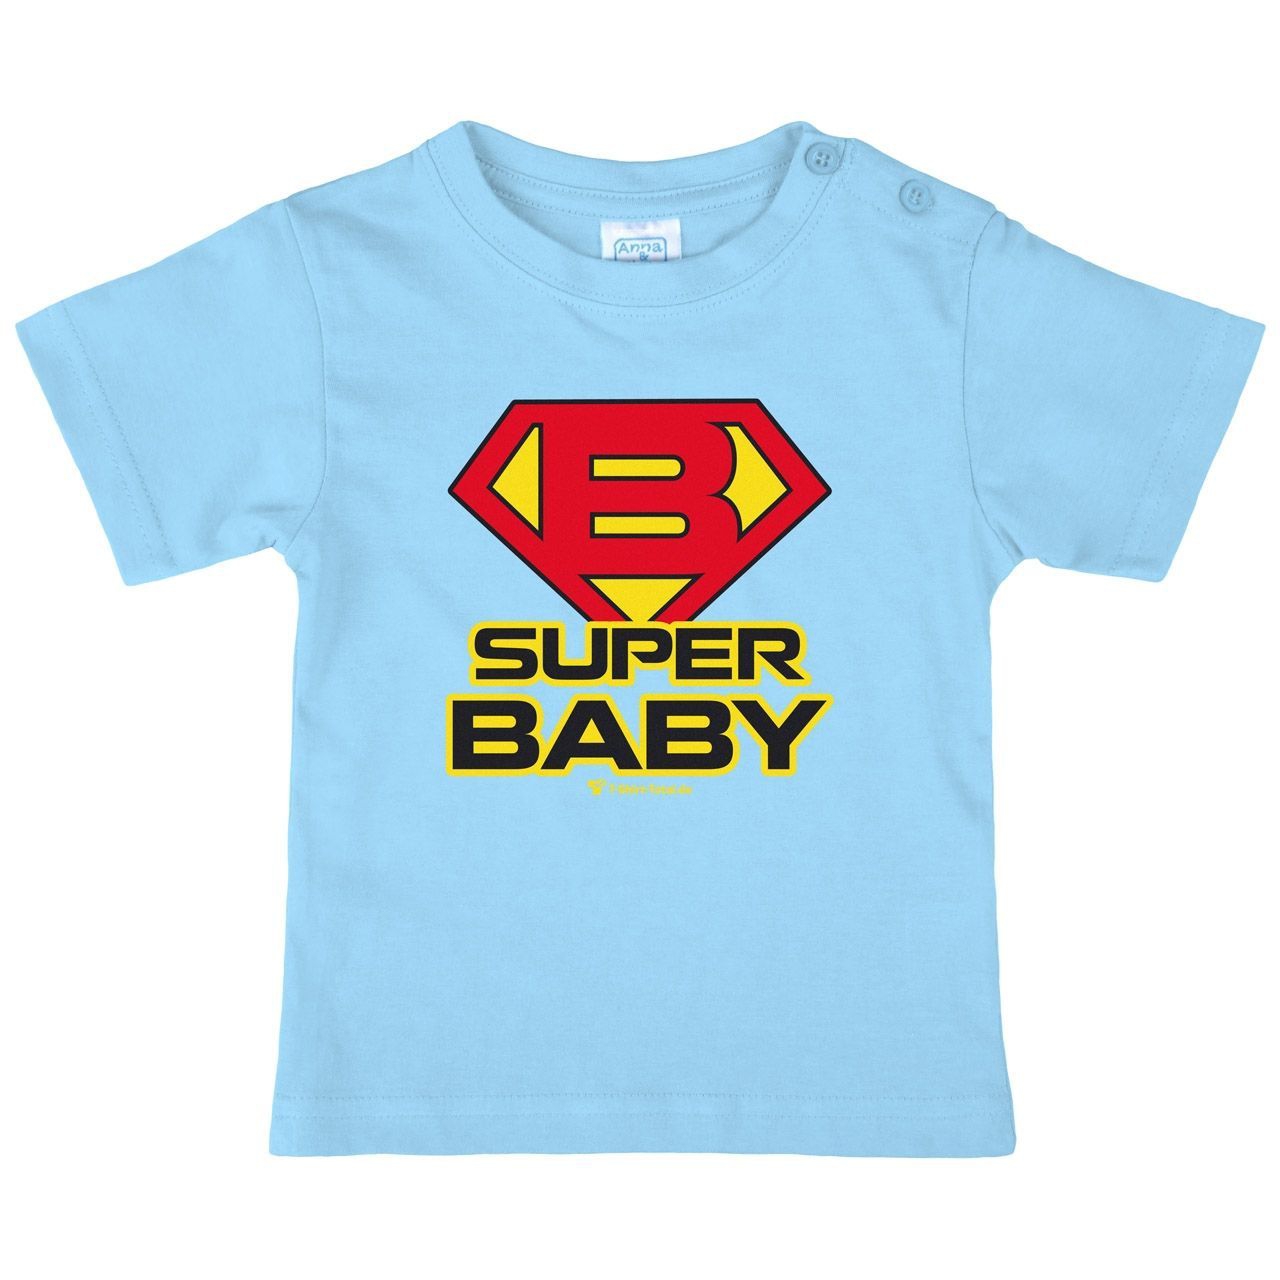 Super Baby Kinder T-Shirt hellblau 92